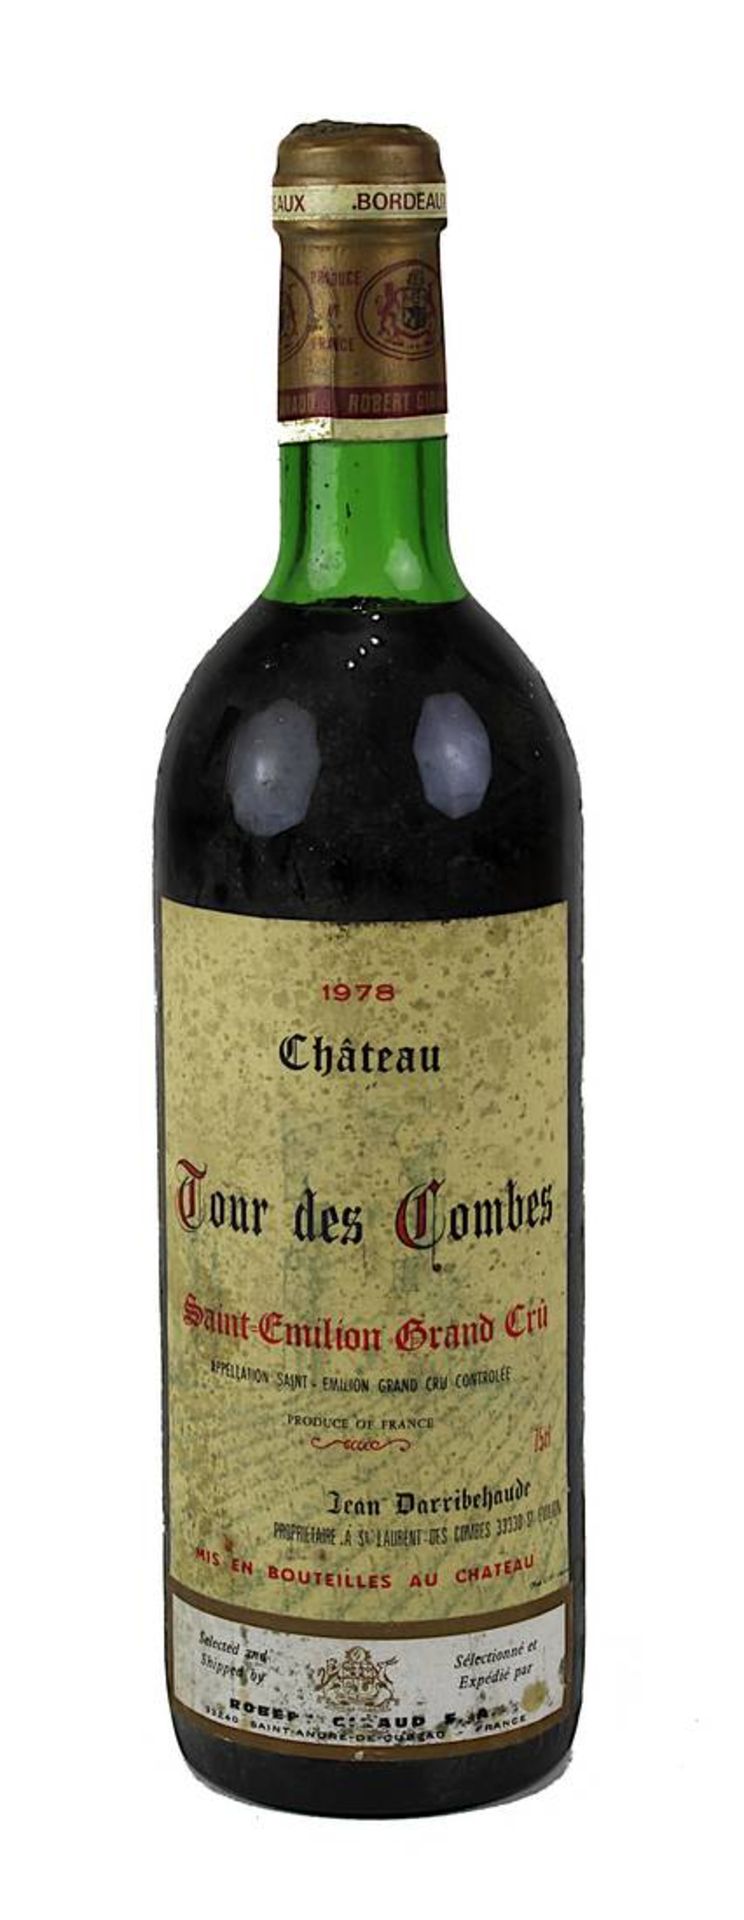 1 Flasche 1978er Château Tour des Combes, Saint Emilian Grand Crû, Jean Darribehaude, Füllhöhe obere